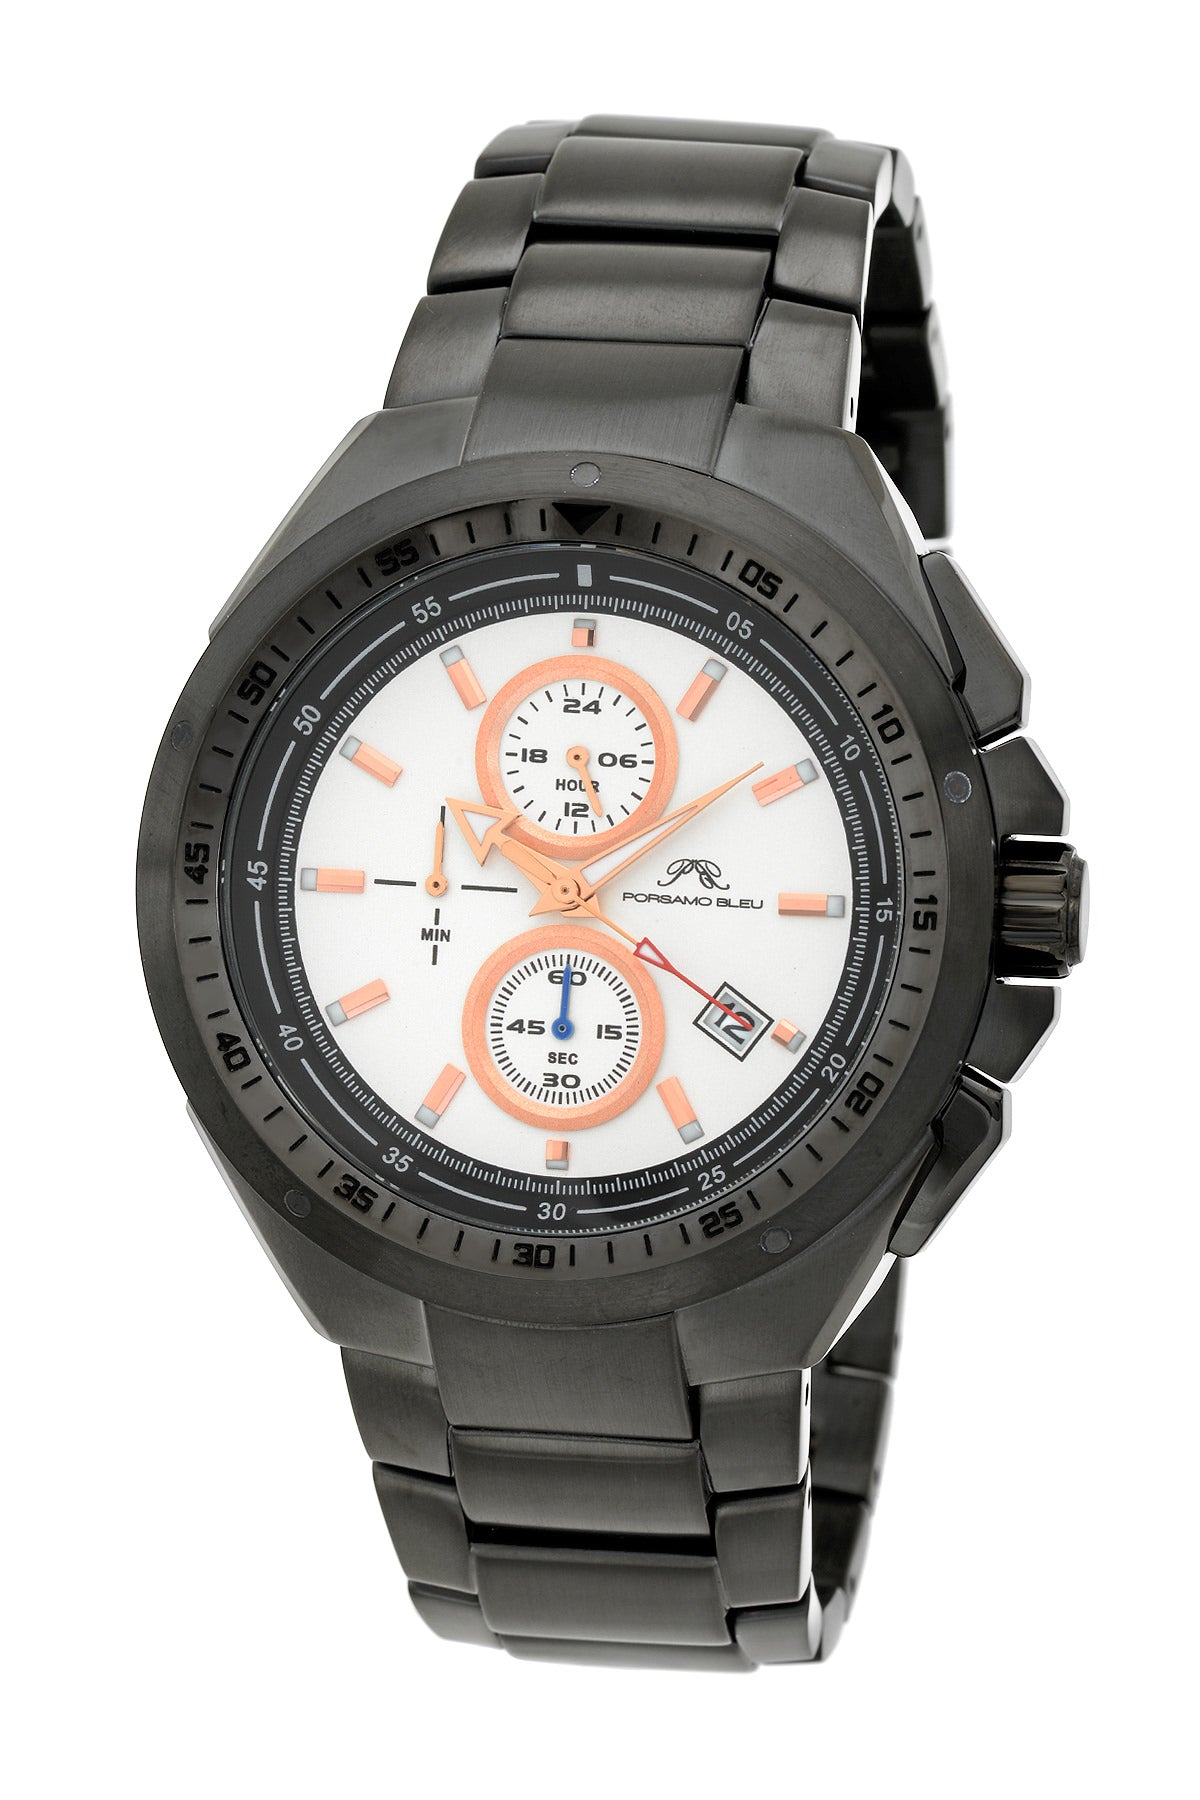 Porsamo Bleu Damien luxury chronograph men's stainless steel watch, gunmetal 311EDAS